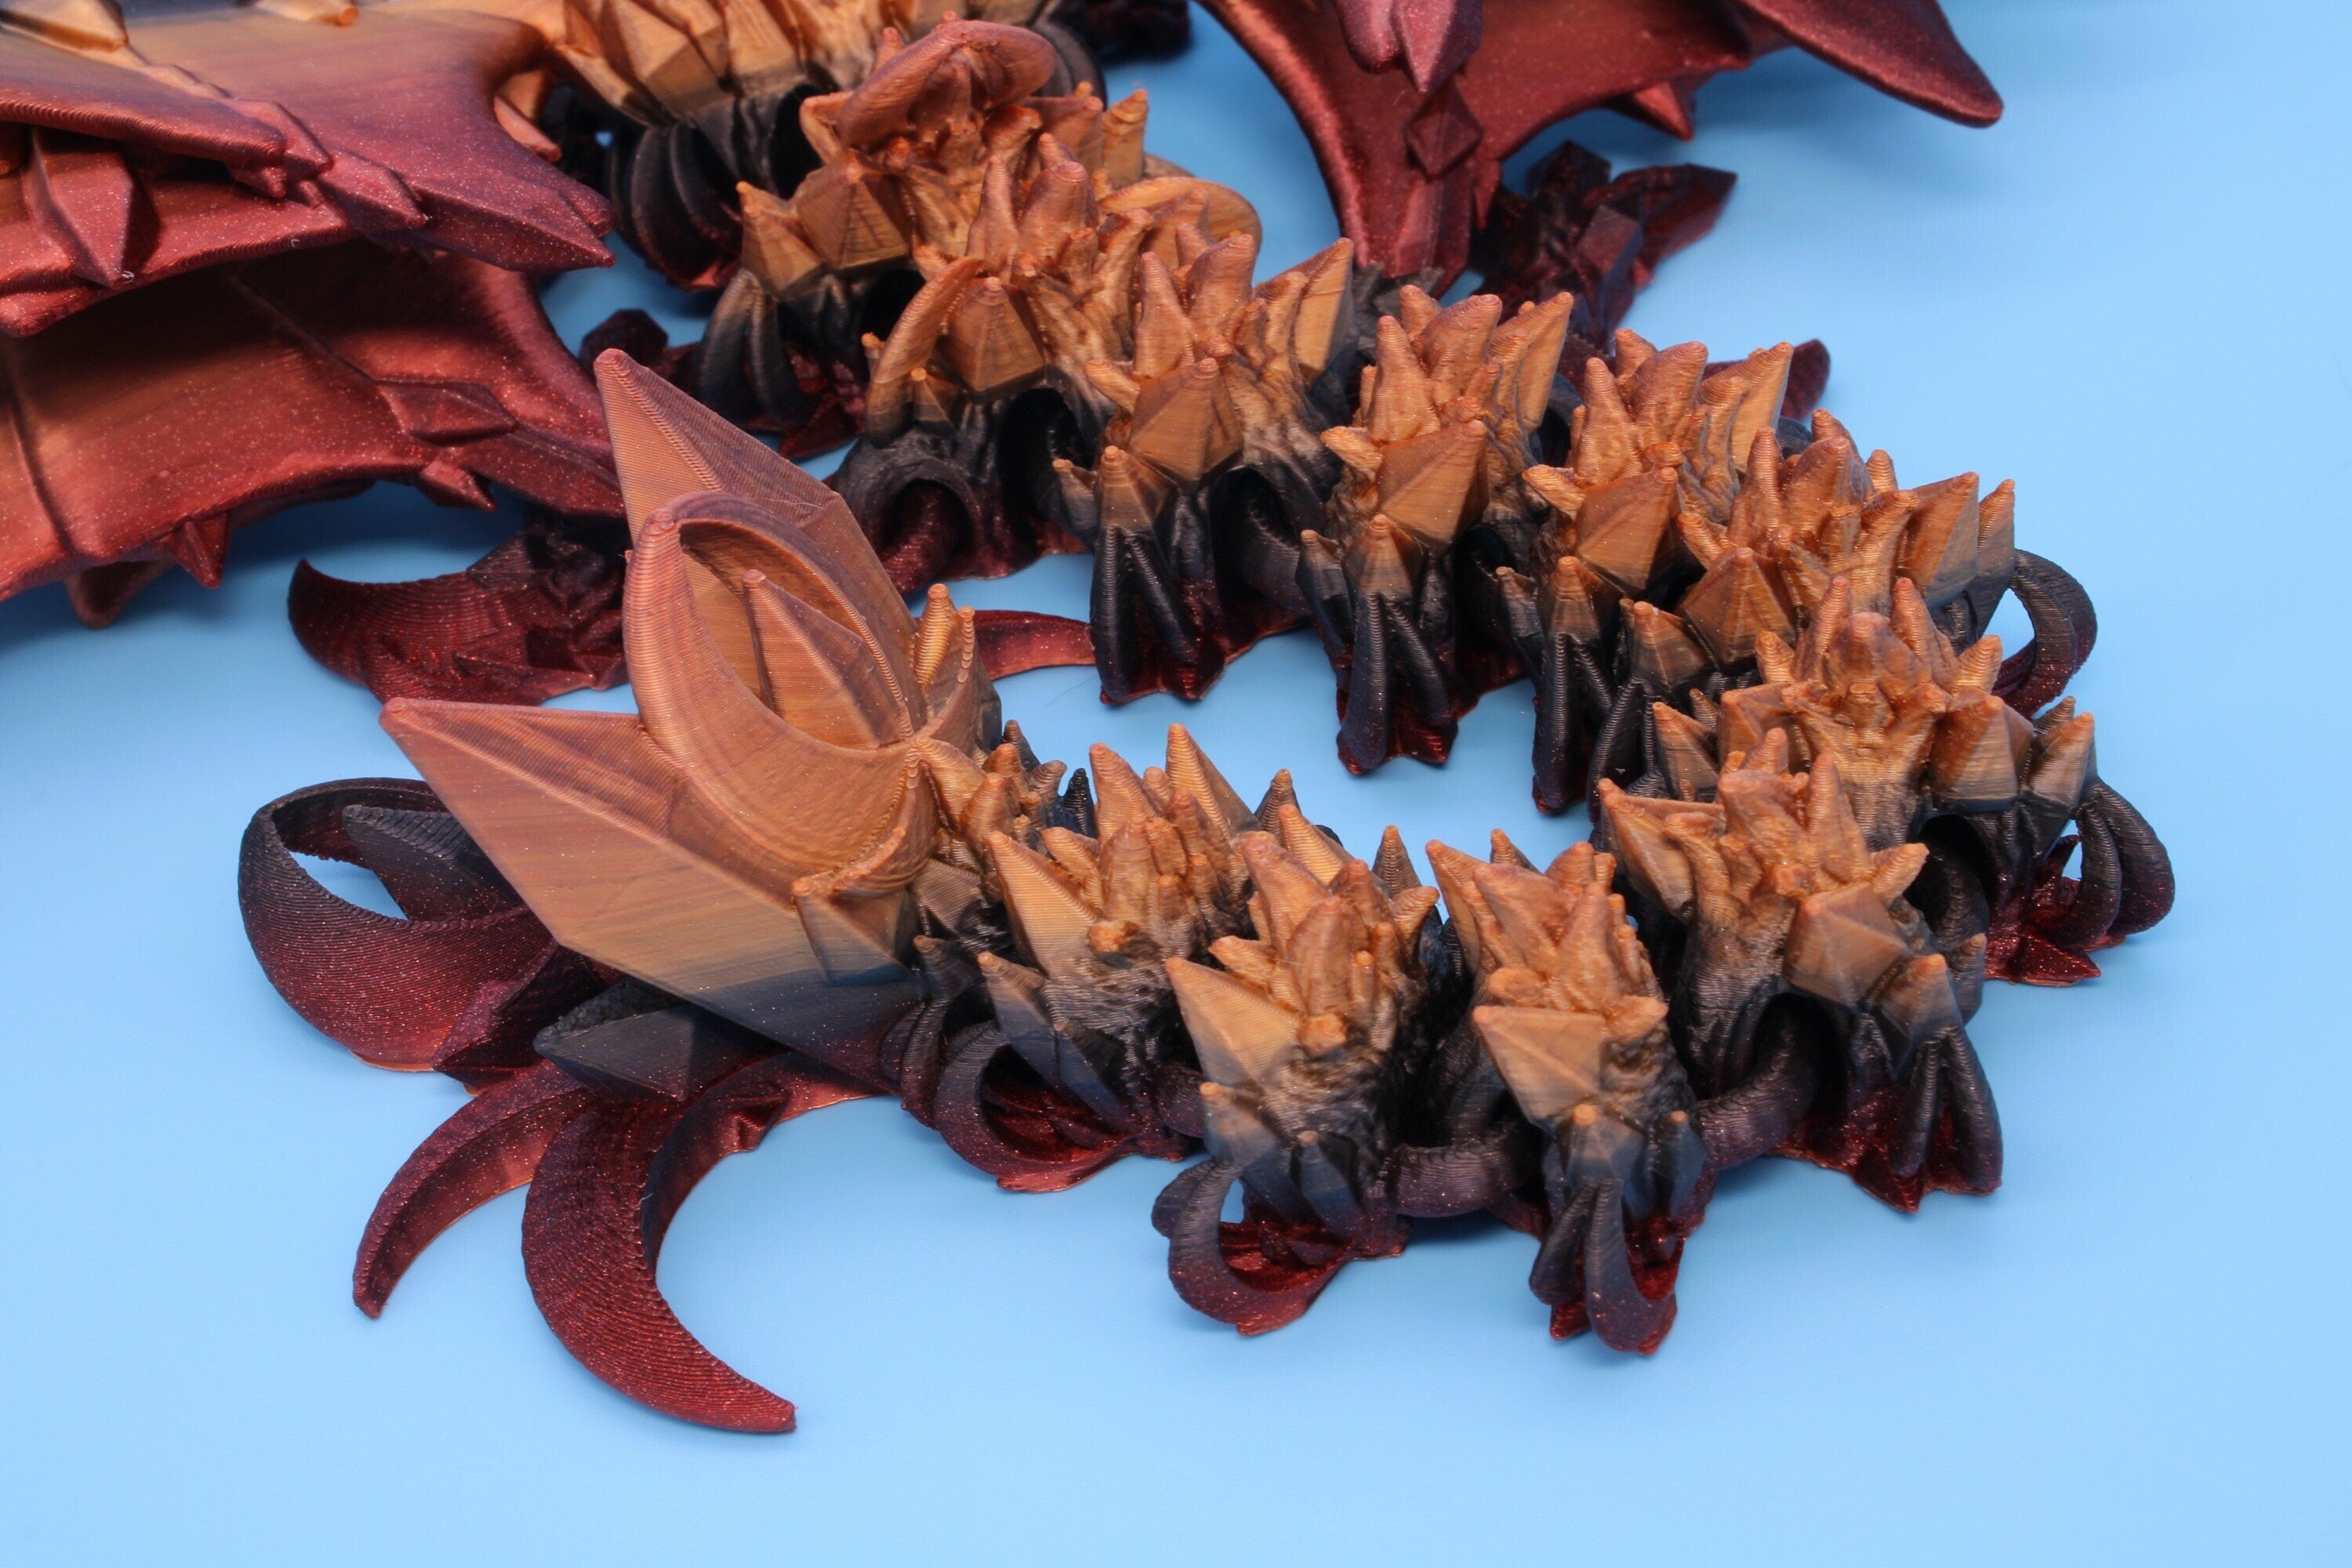 Bat Dragon | Night Wing | Articulating Dragon | 3D Printed Fidget | Flexi Toy | Adult Fidget Toy | Sensory Desk Toy | 12.5 in.